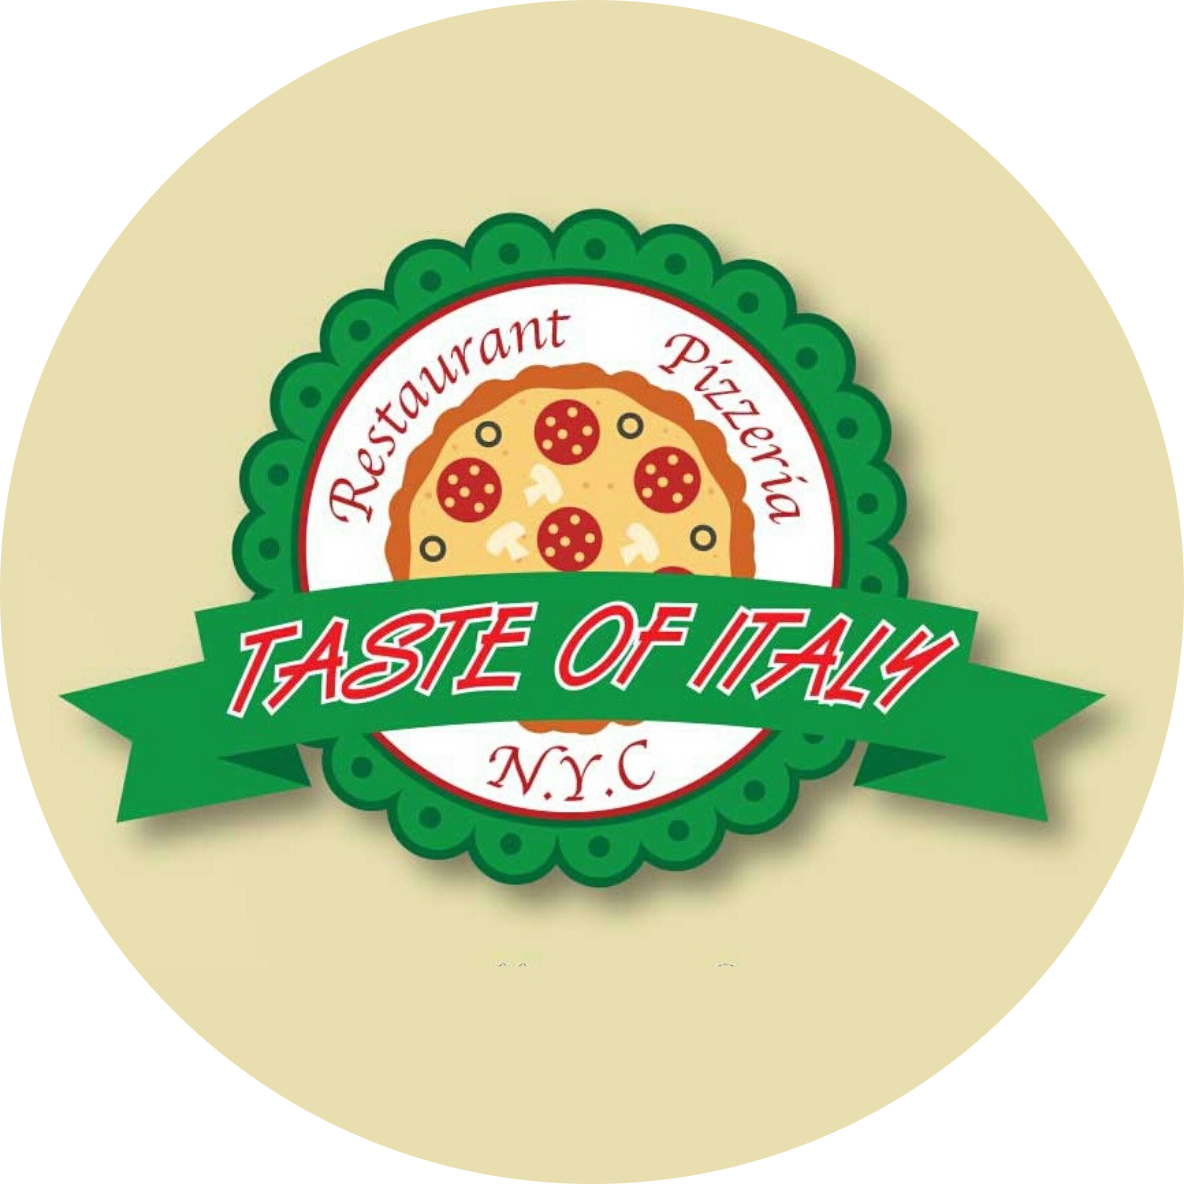 Taste of Italy Restaurant & Pizzeria NYC logo